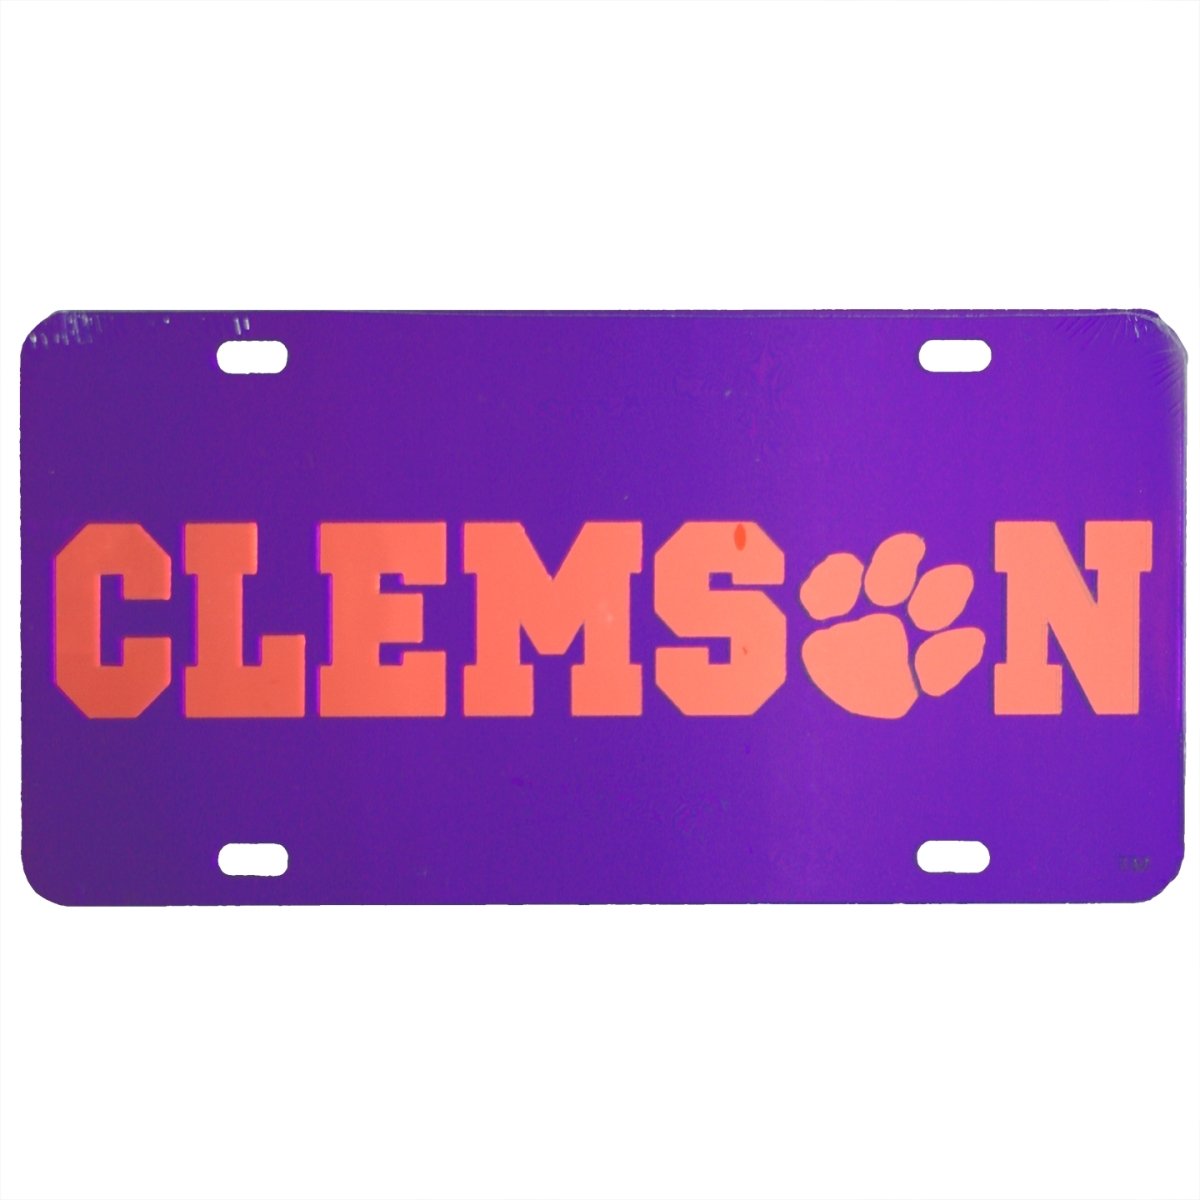 Laser Cut Mirrored Clems(paw)n Car Tag Purple With Orange Logo - Mr. Knickerbocker